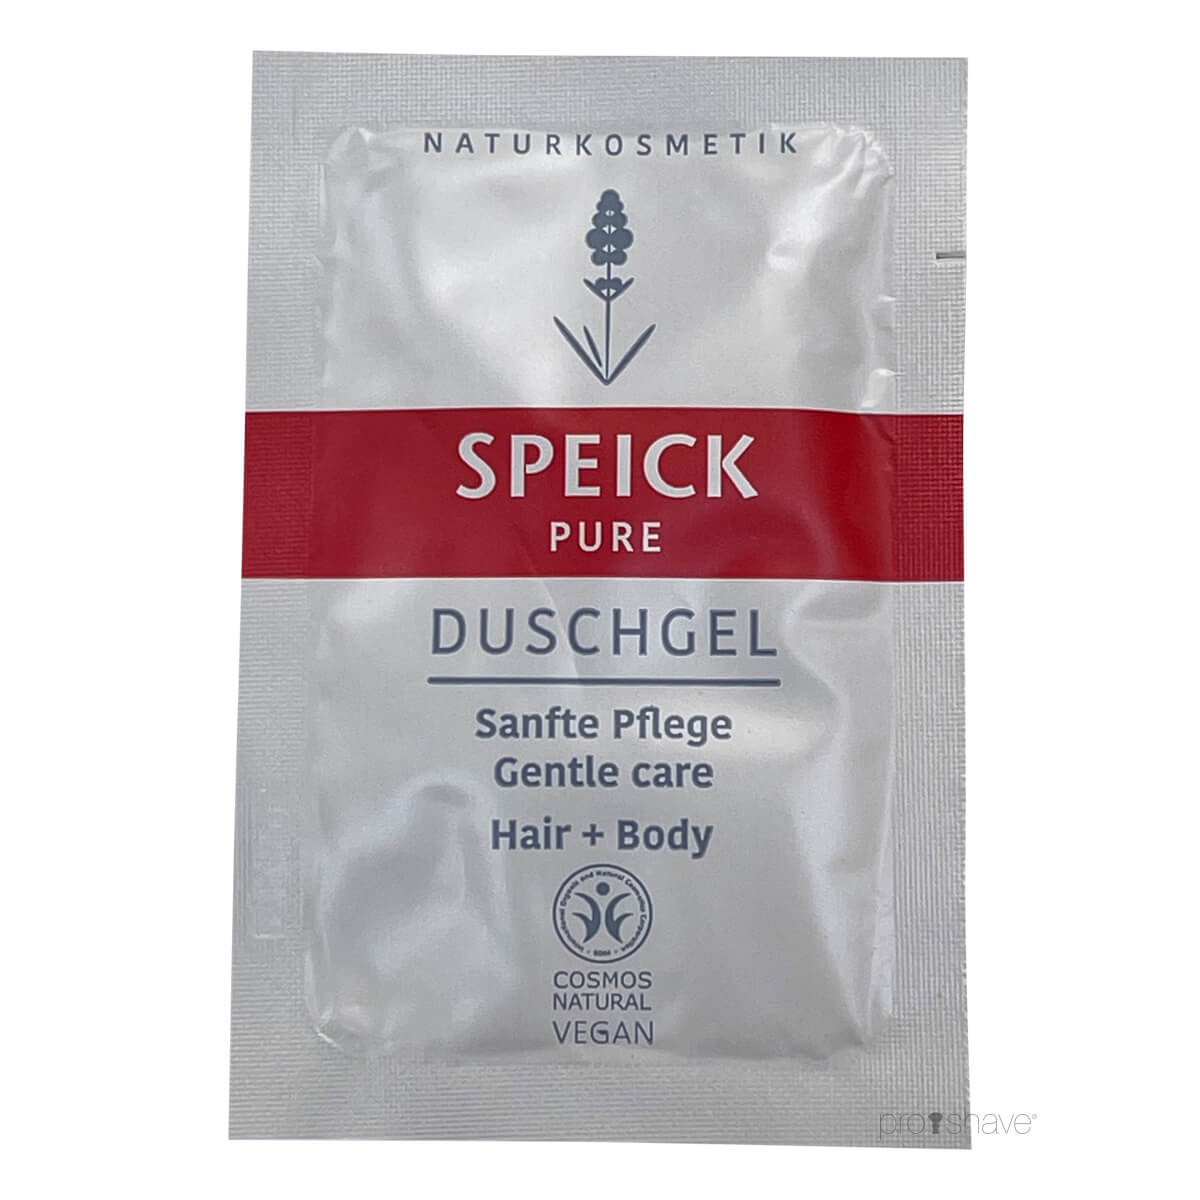 Se Speick Pure Showergel, Sample, 6 ml. hos Proshave